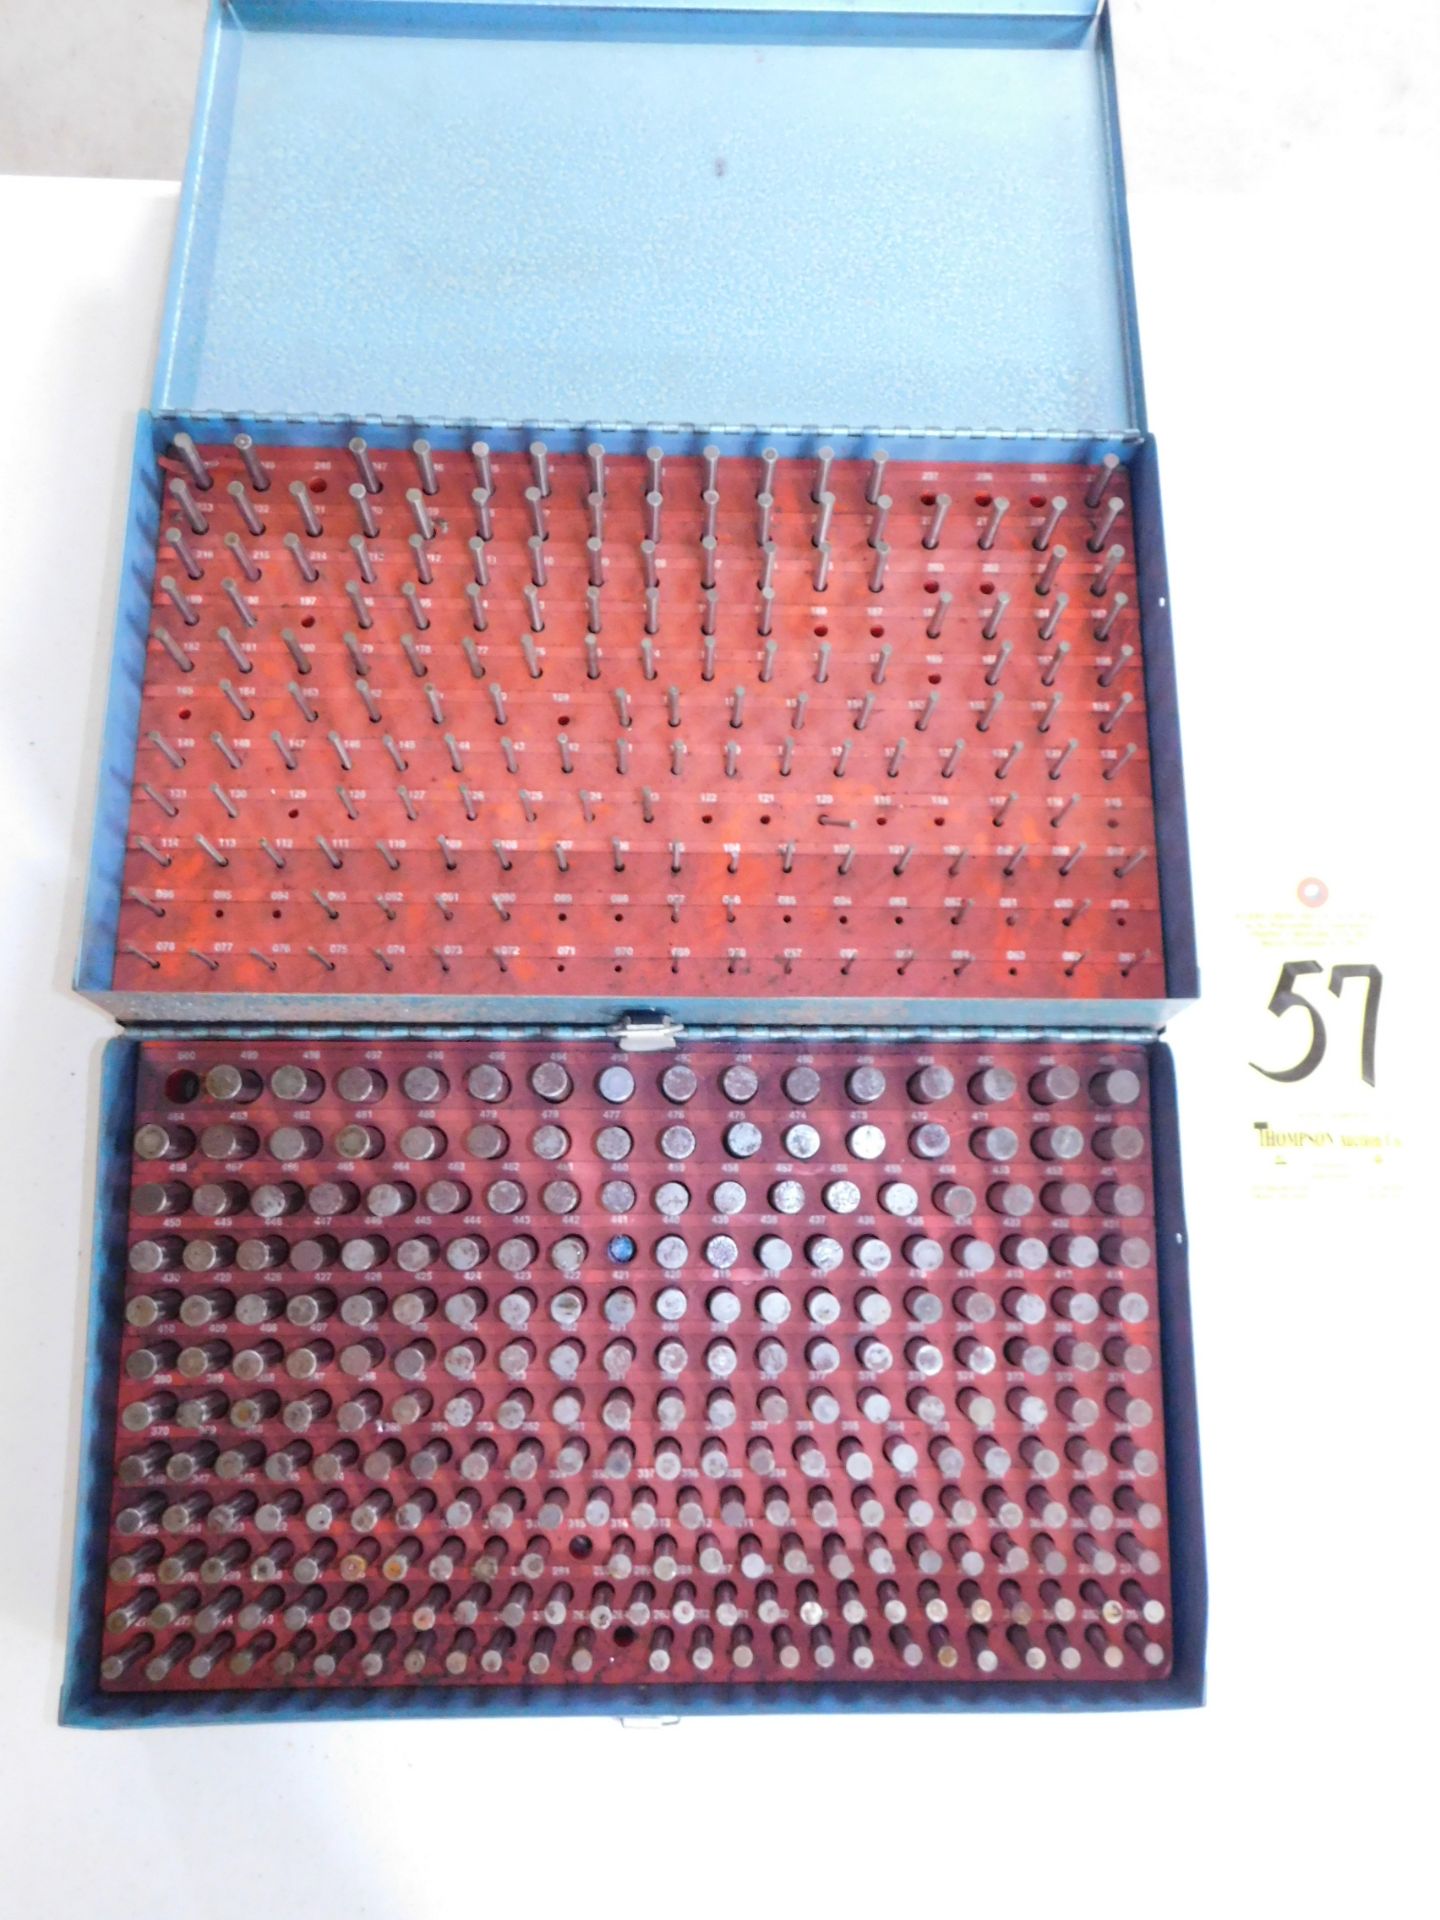 (2) Pin Gage Sets, (1) .061 In. - .250 In., (1) .251 In. - .500 In.